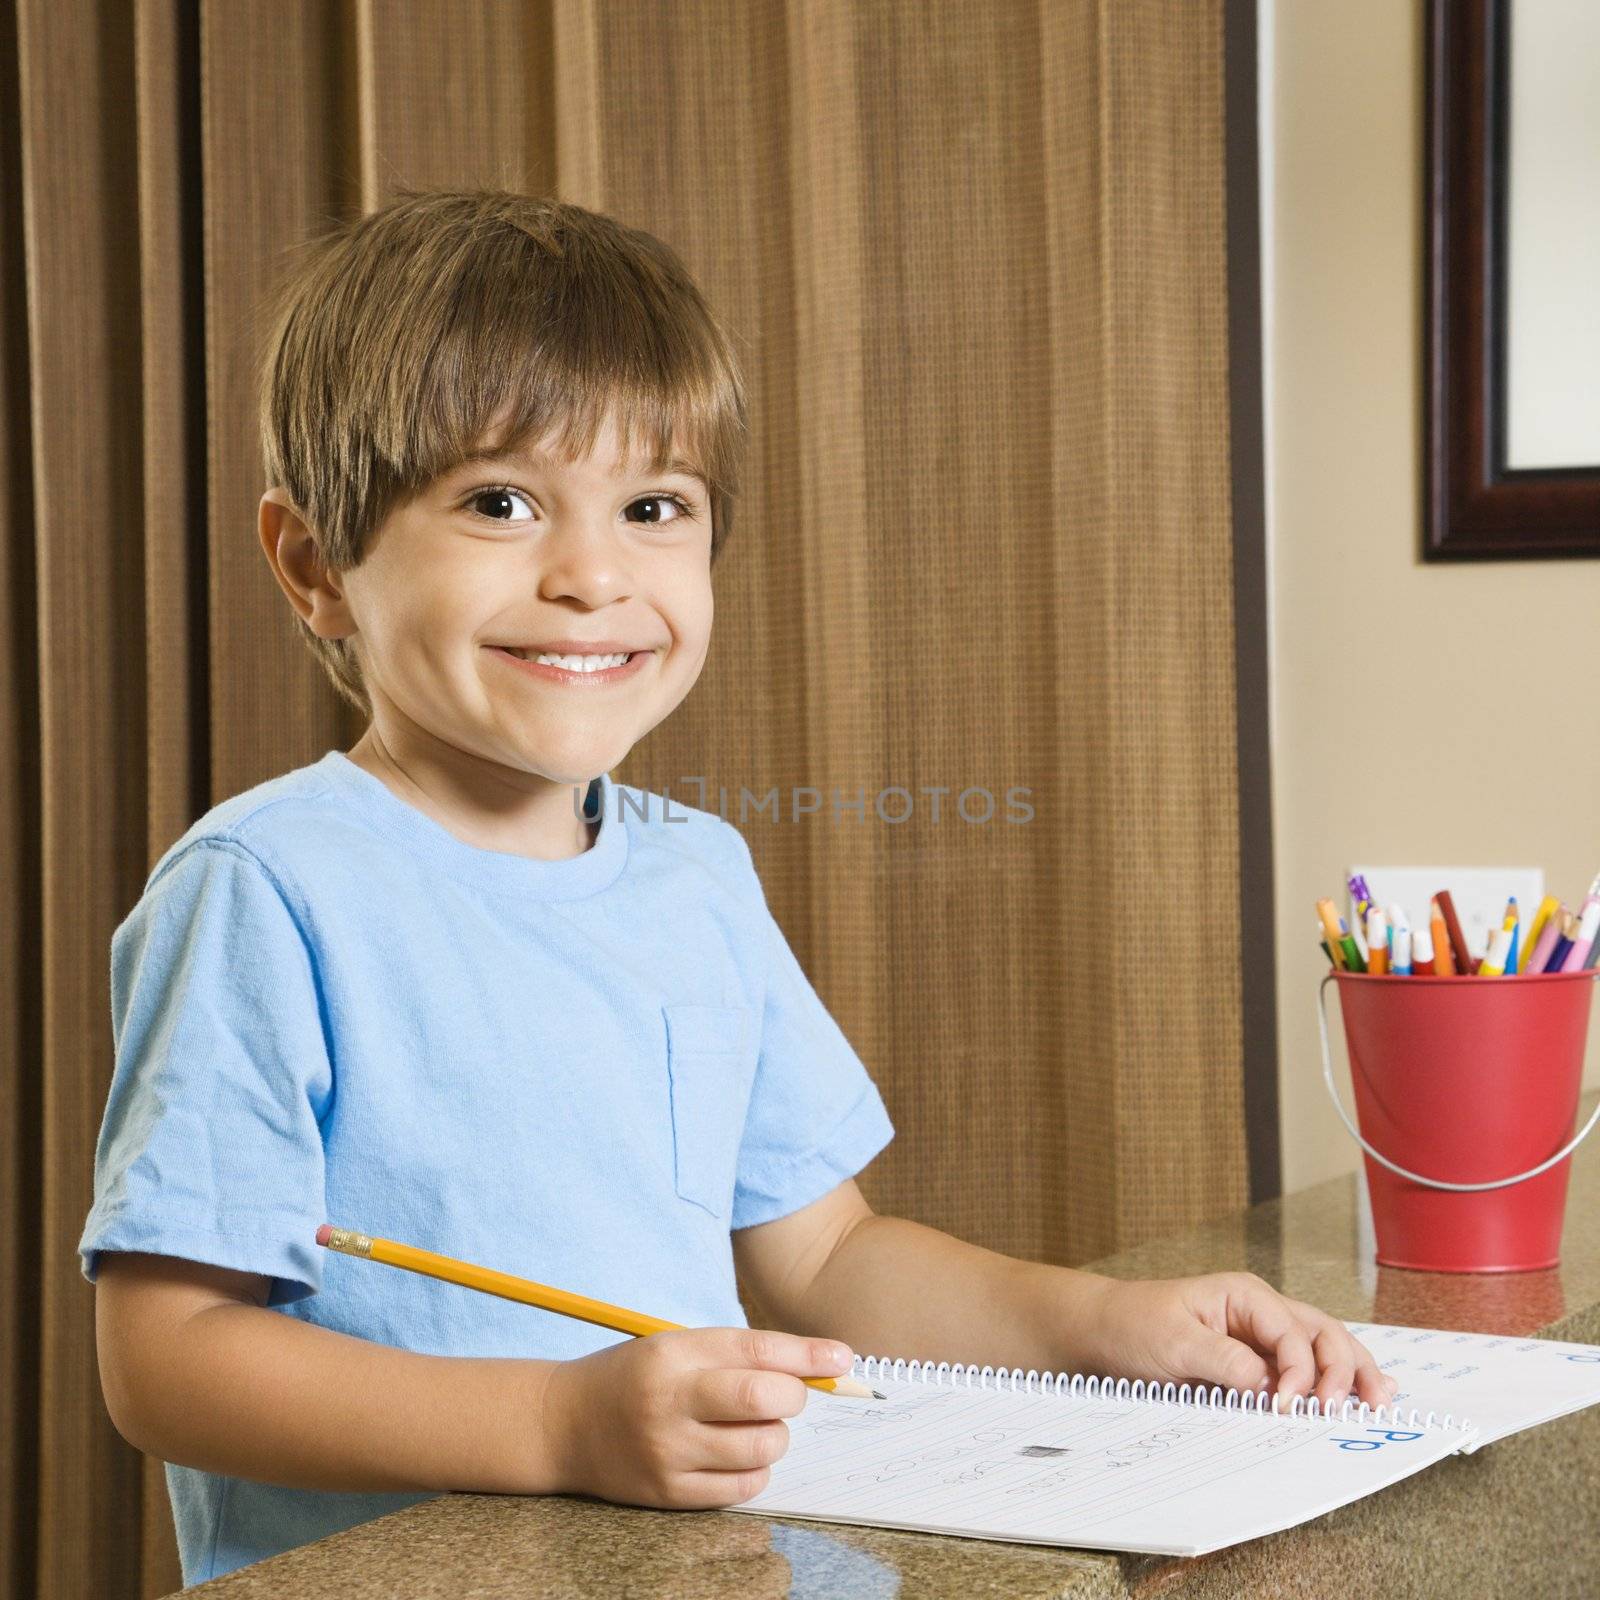 Hispanic boy smiling at viewer and doing homework.